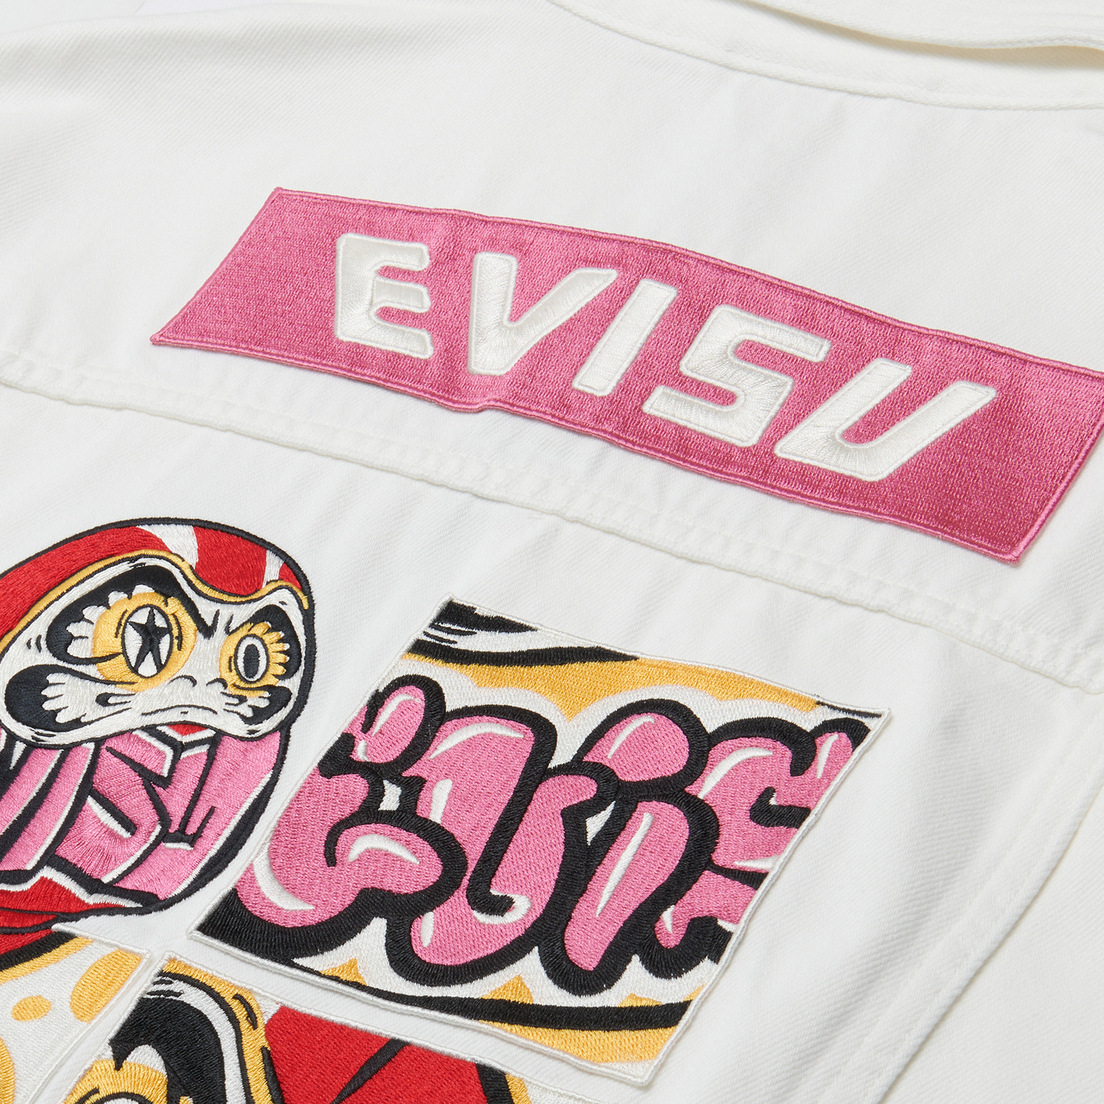 Evisu Женская джинсовая куртка Daruma Embroidered & Printed Stripes